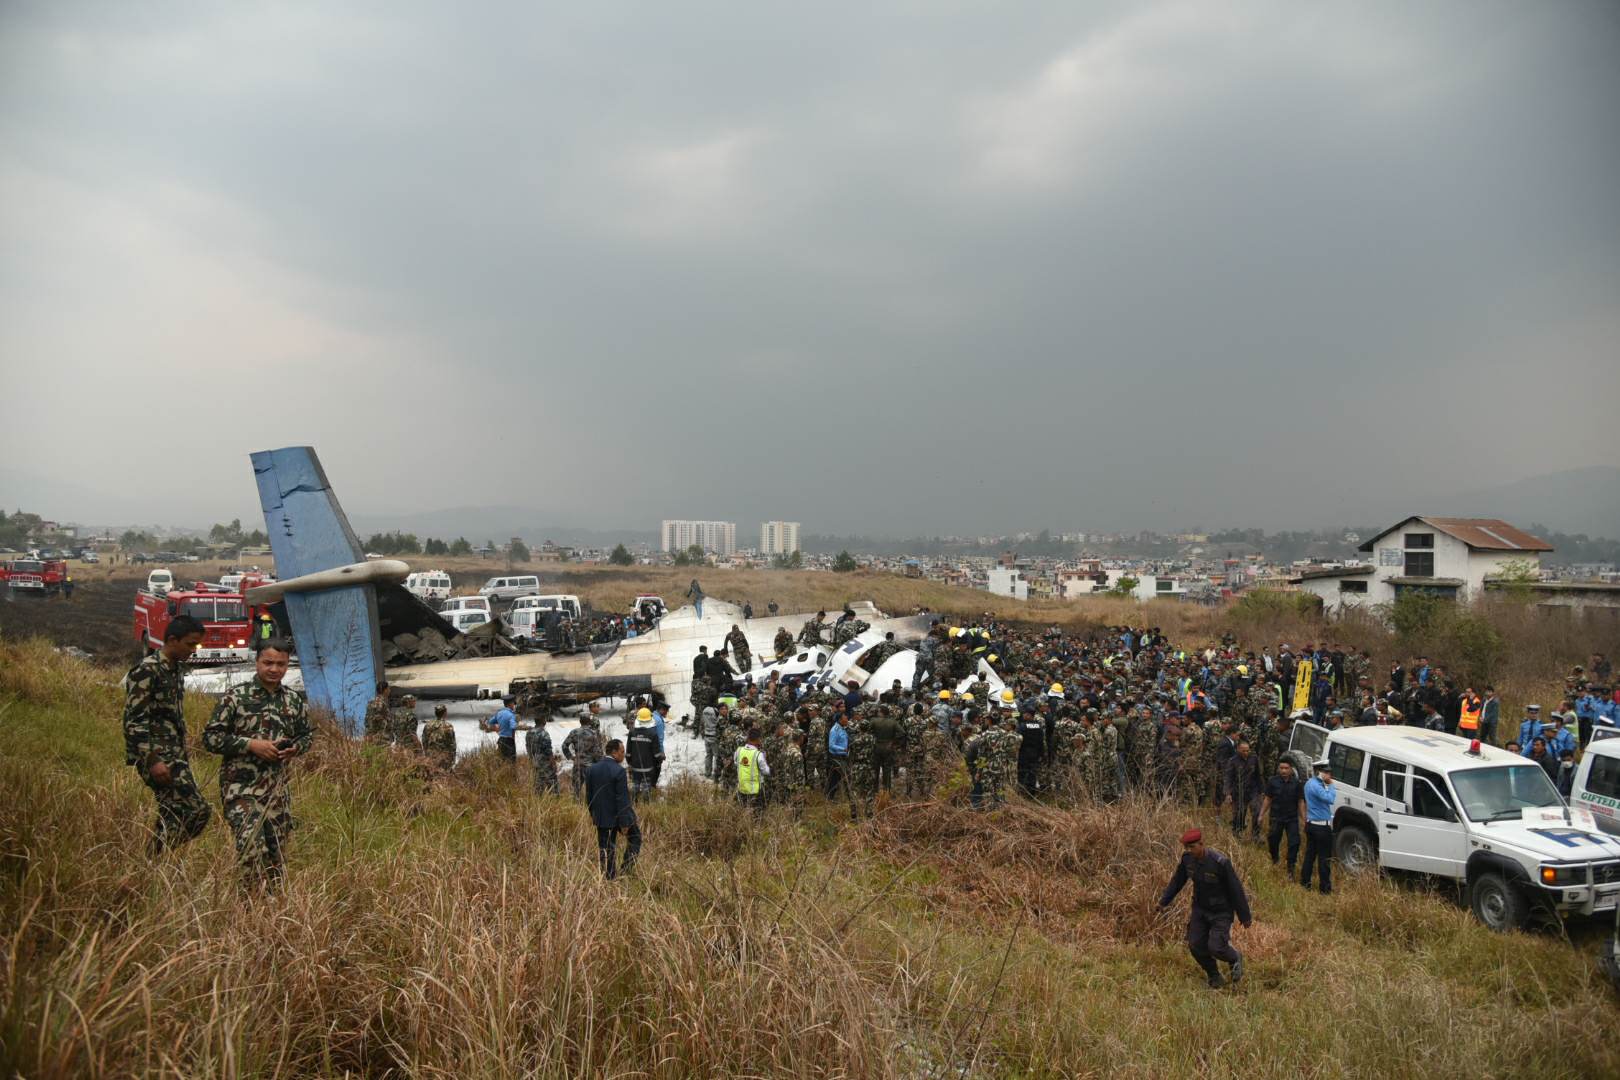 US-Bangla Airlines plane crashes at Kathmandu airport